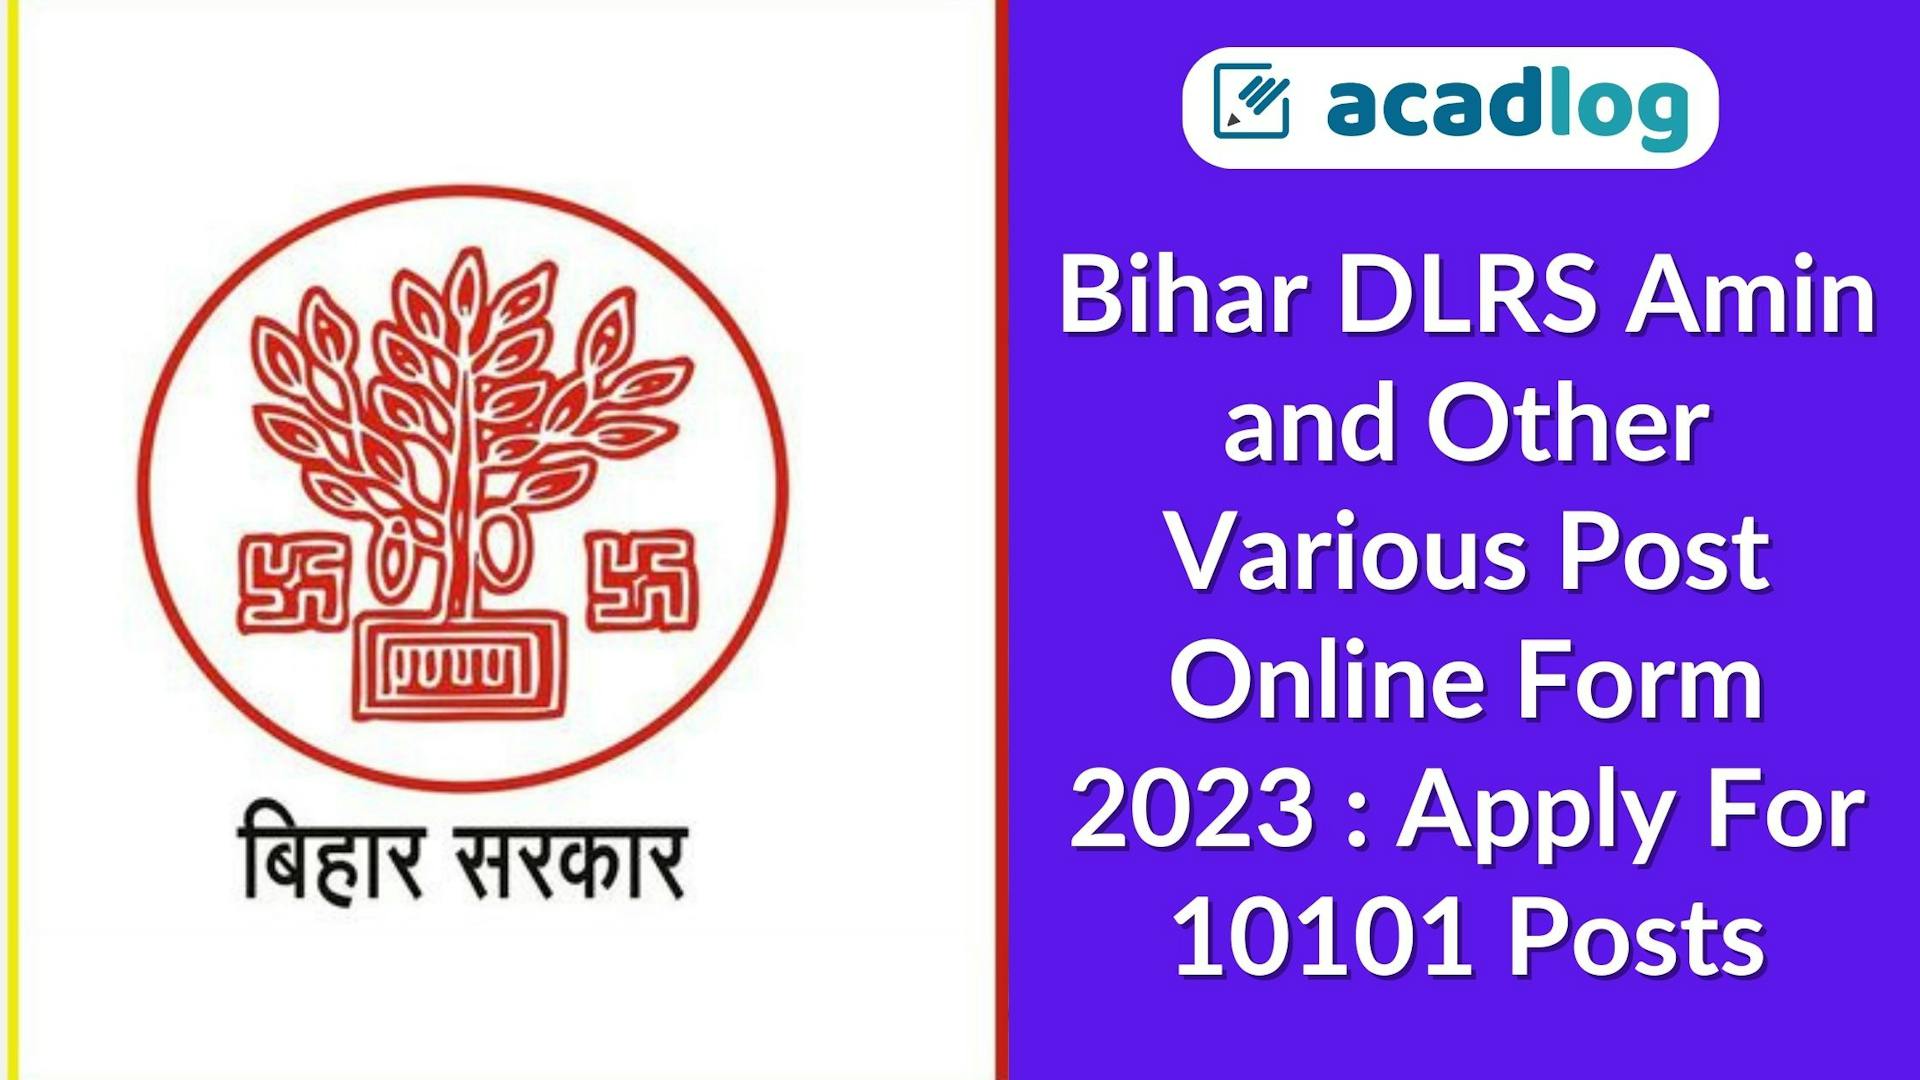 Acadlog: BCECE Bihar Directorate of Land Records & Survey DLRS AMIN, Kanoongo, Clerk & ASO Recruitment 2023 Apply Online for 10101 Post